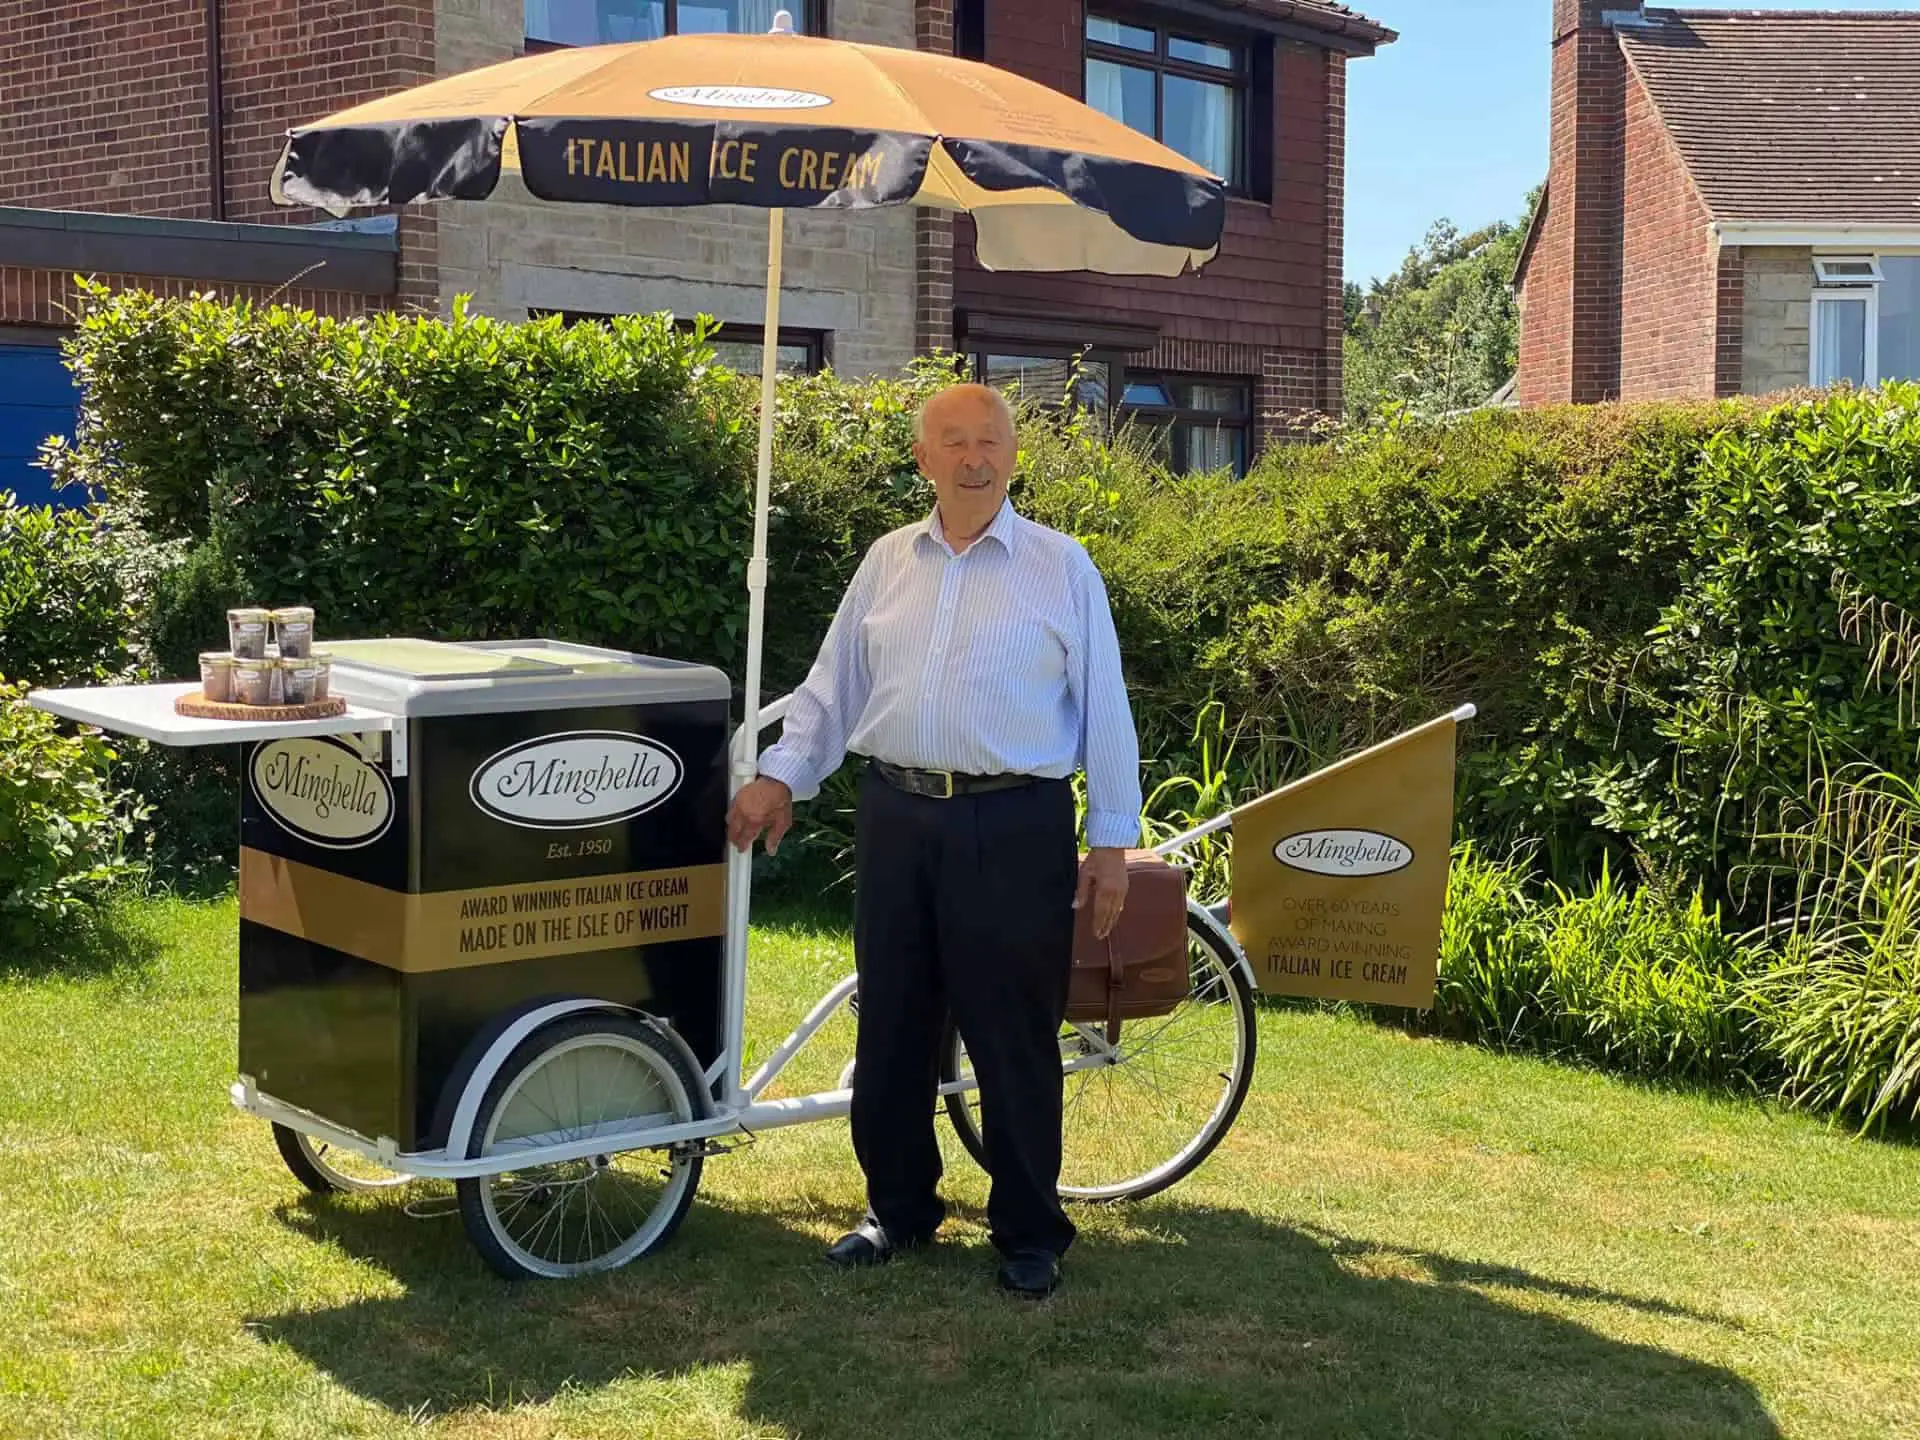 Eddie Minghella standing by his ice cream bicycle